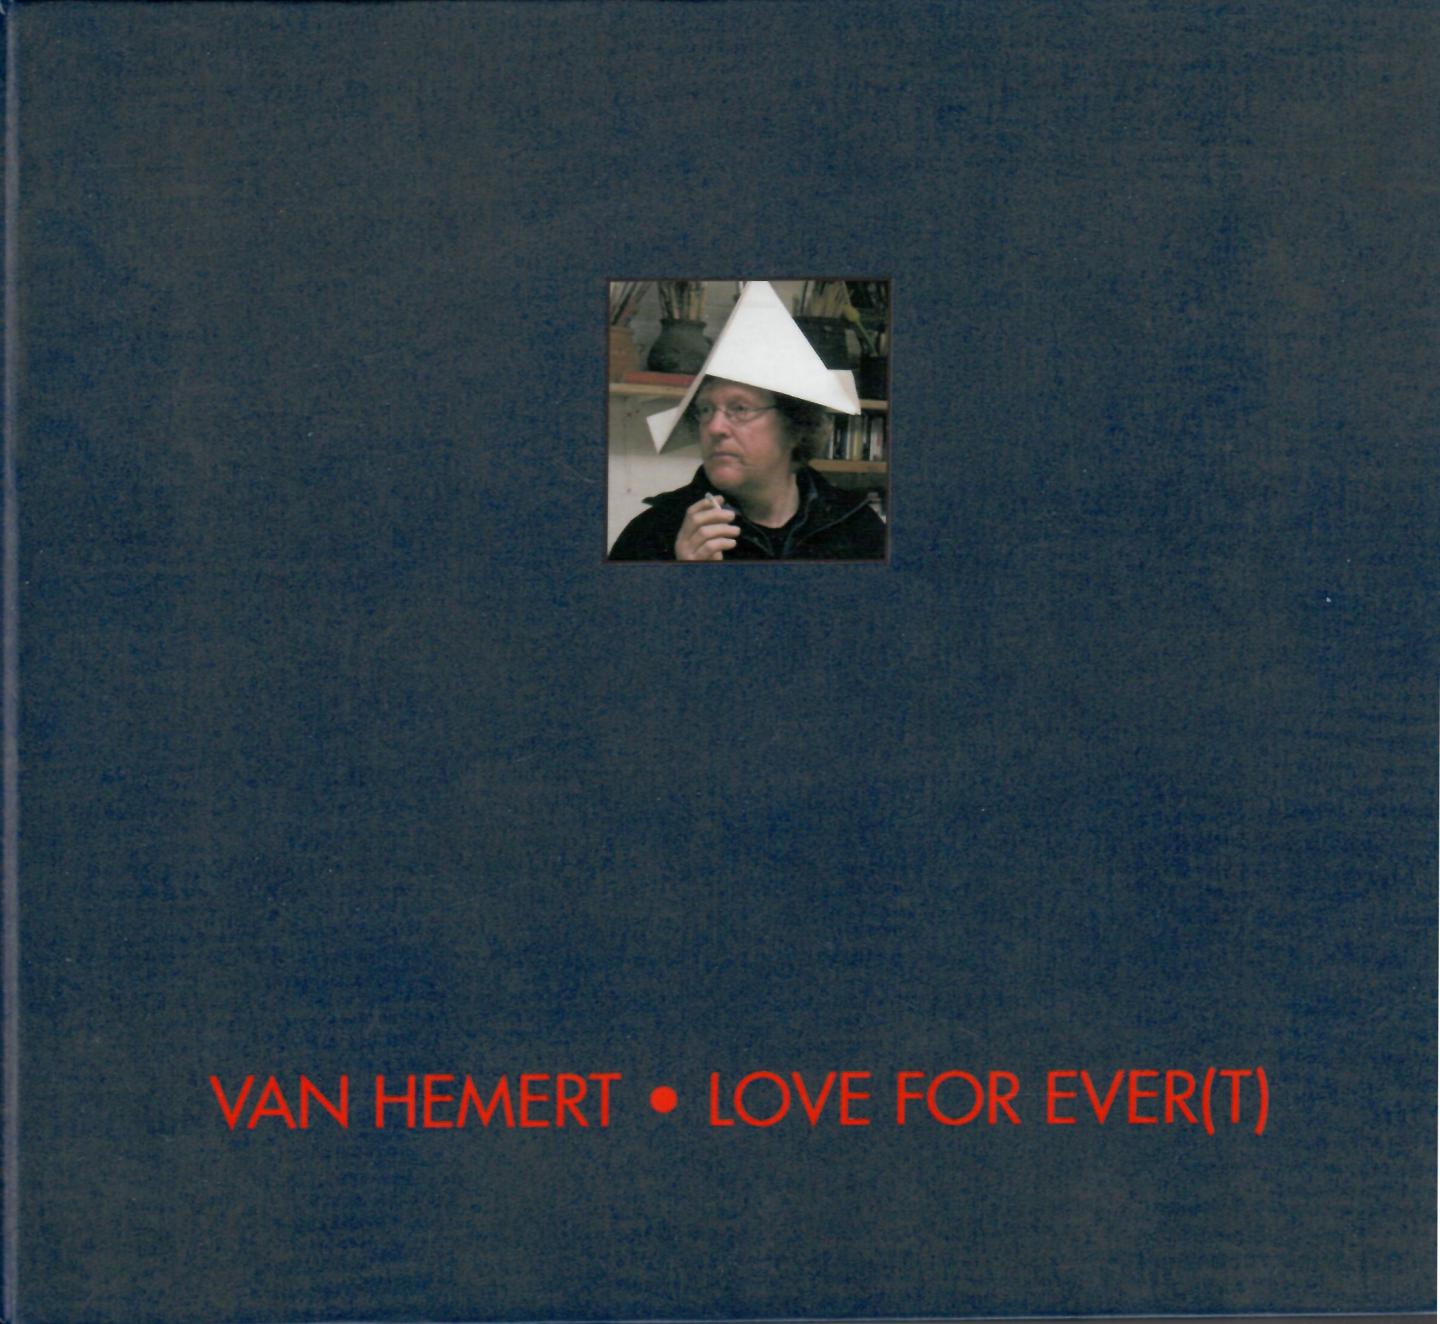 Hemert, Evert van - 1952 - 2002 Still runing against the wind. An unfinished story.